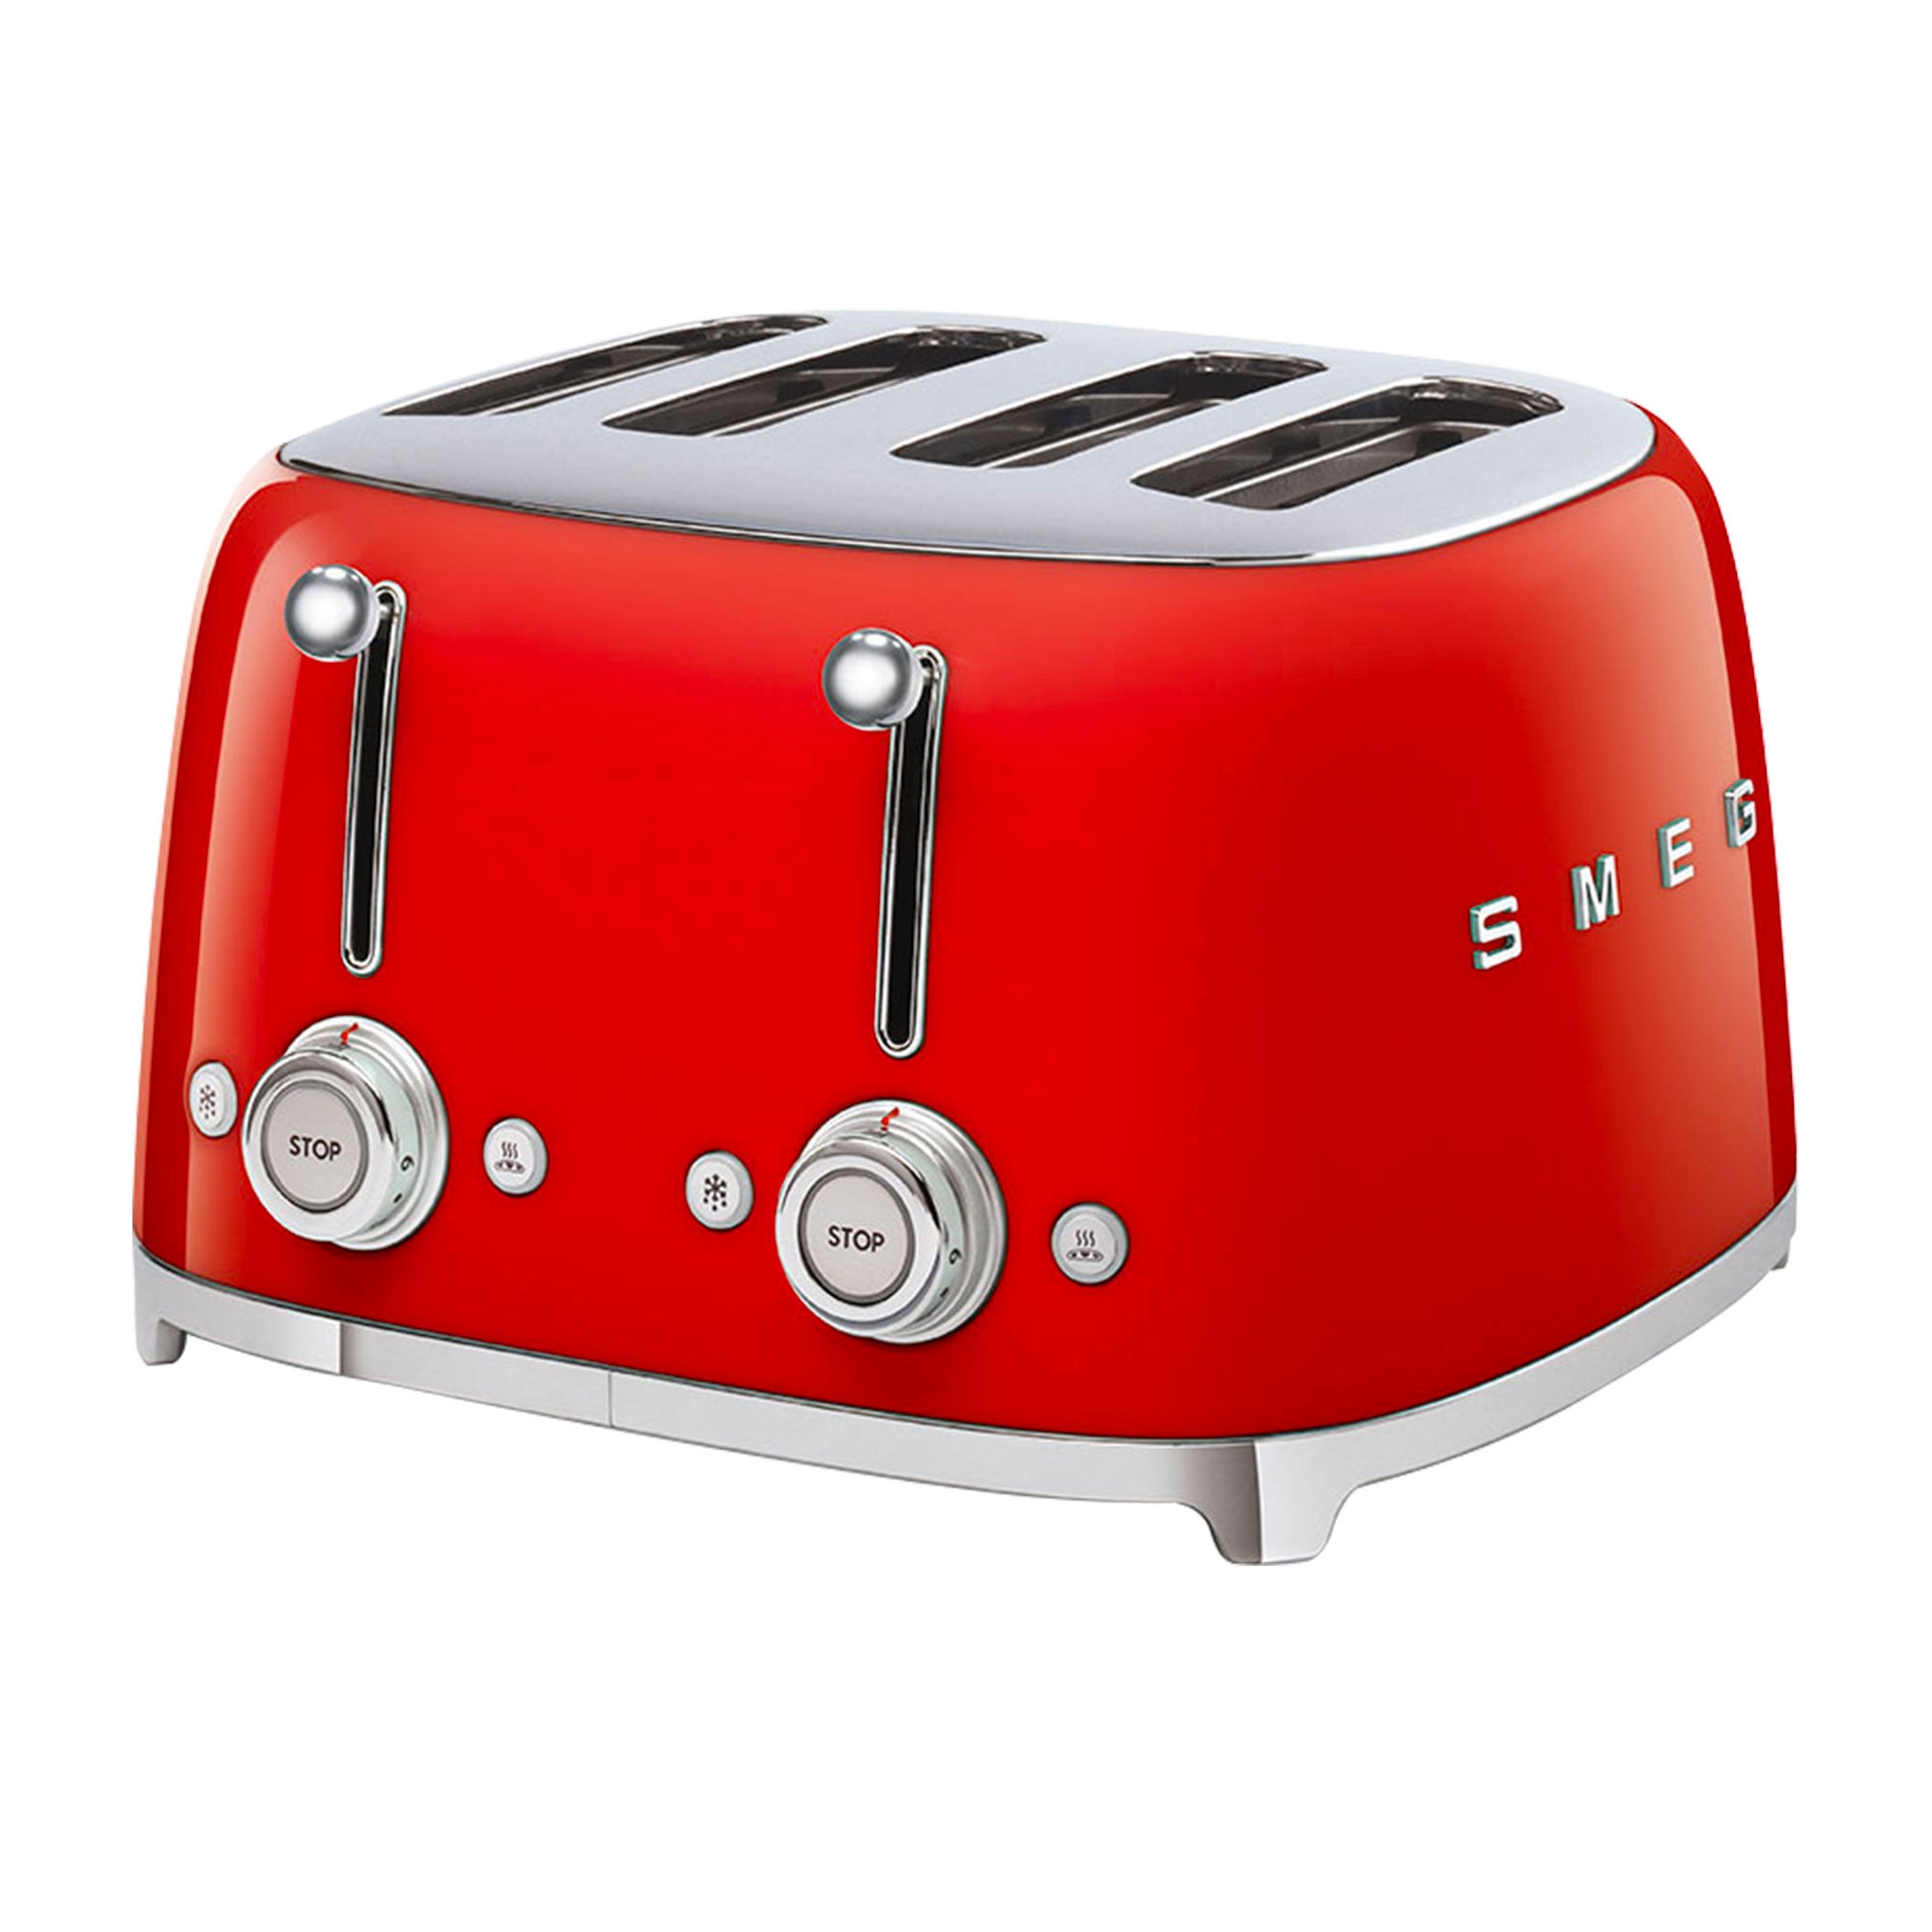 Smeg 50's Retro Style 4 Slot Toaster Red Image 1